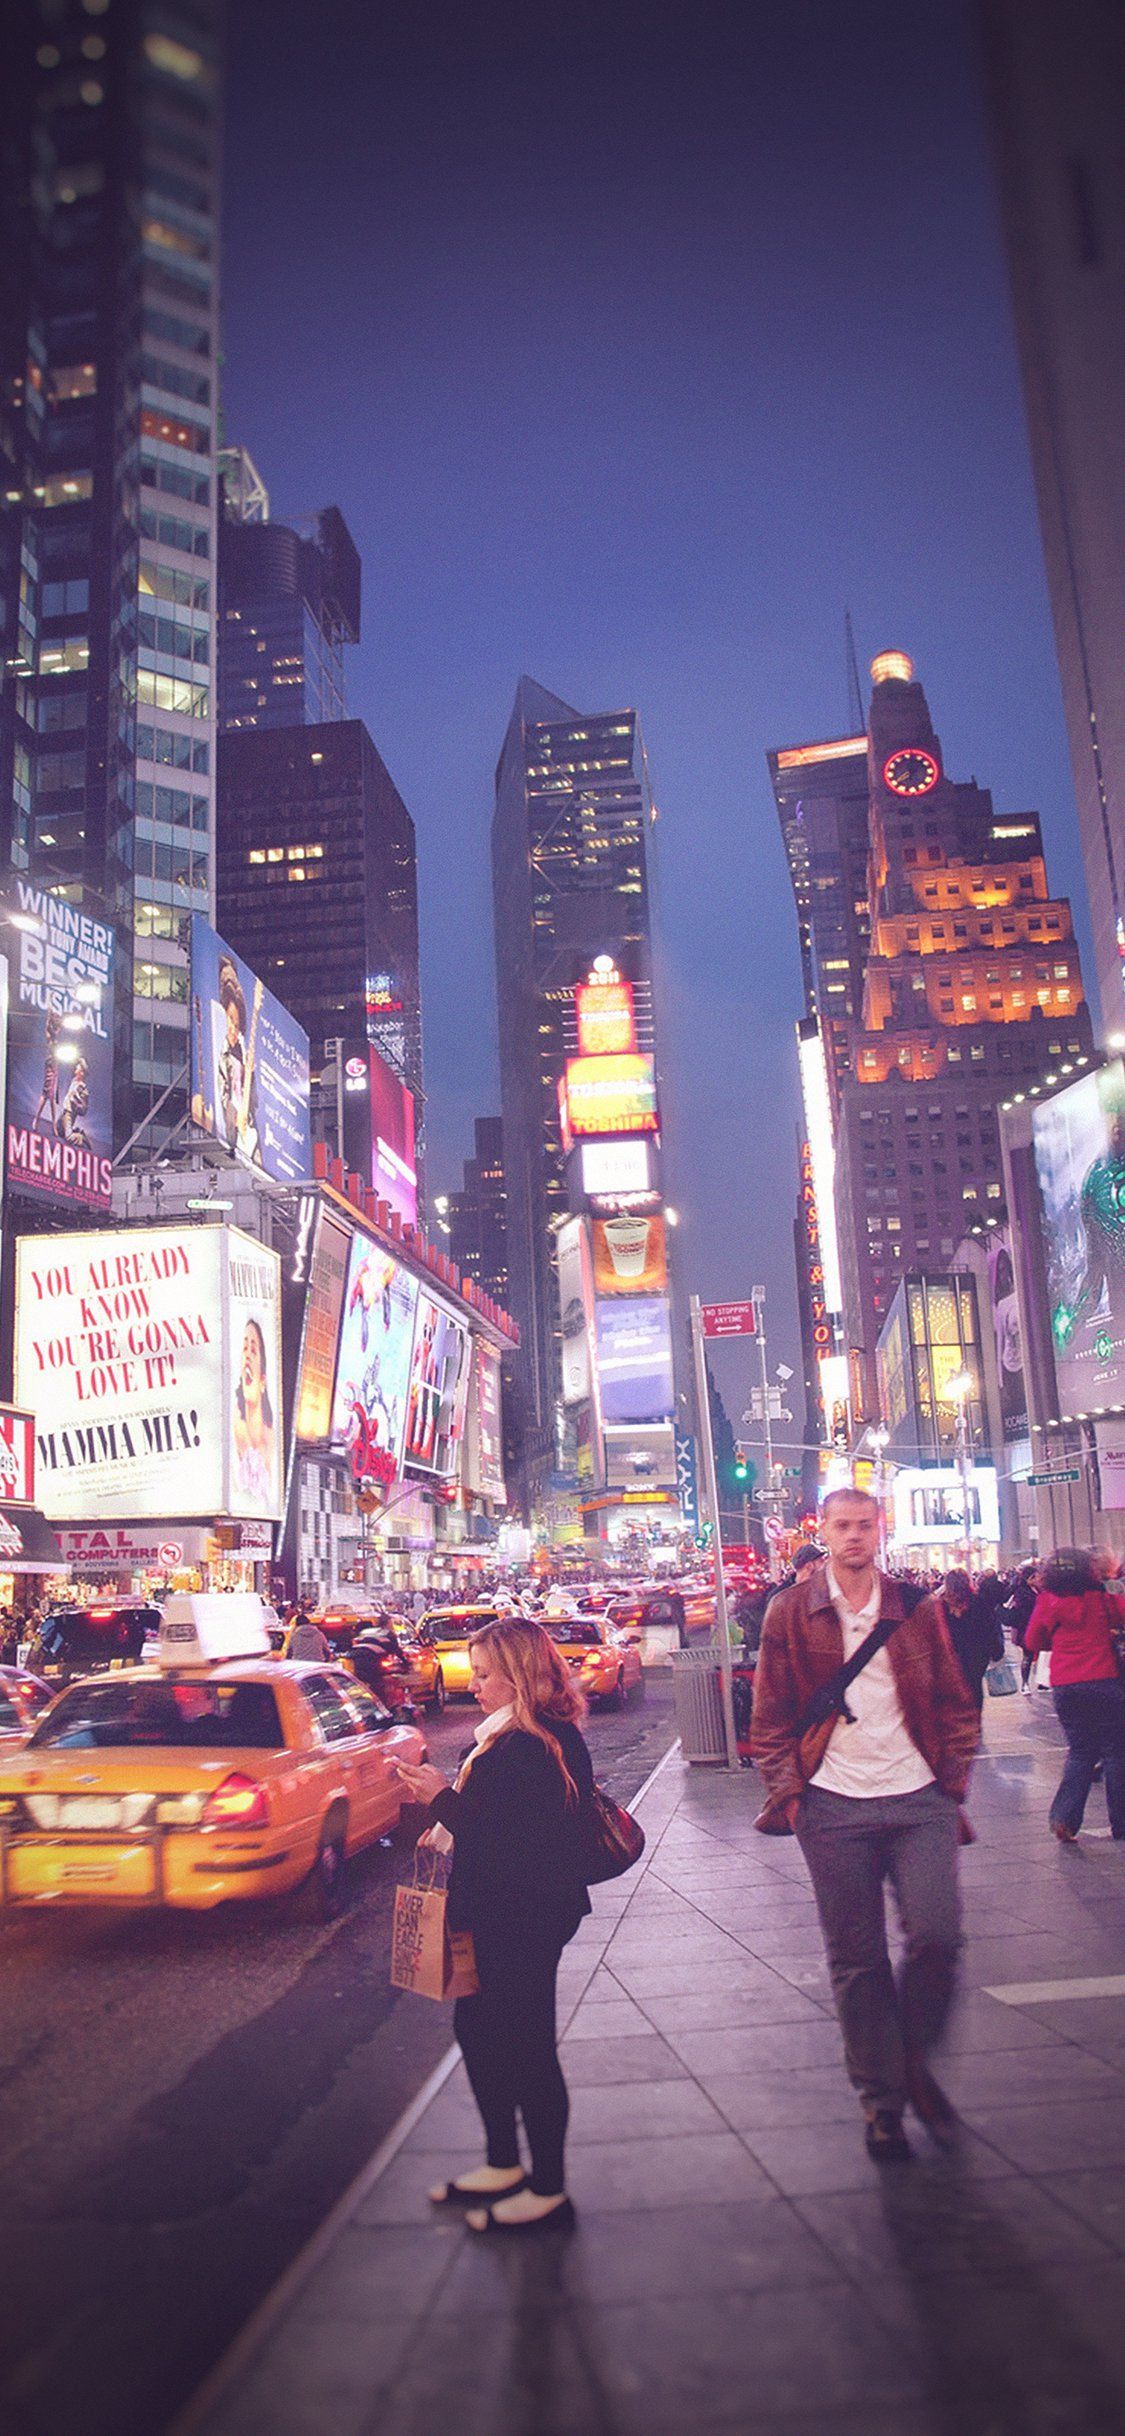 New York street night city vignette iPhone X Wallpaper Free Download